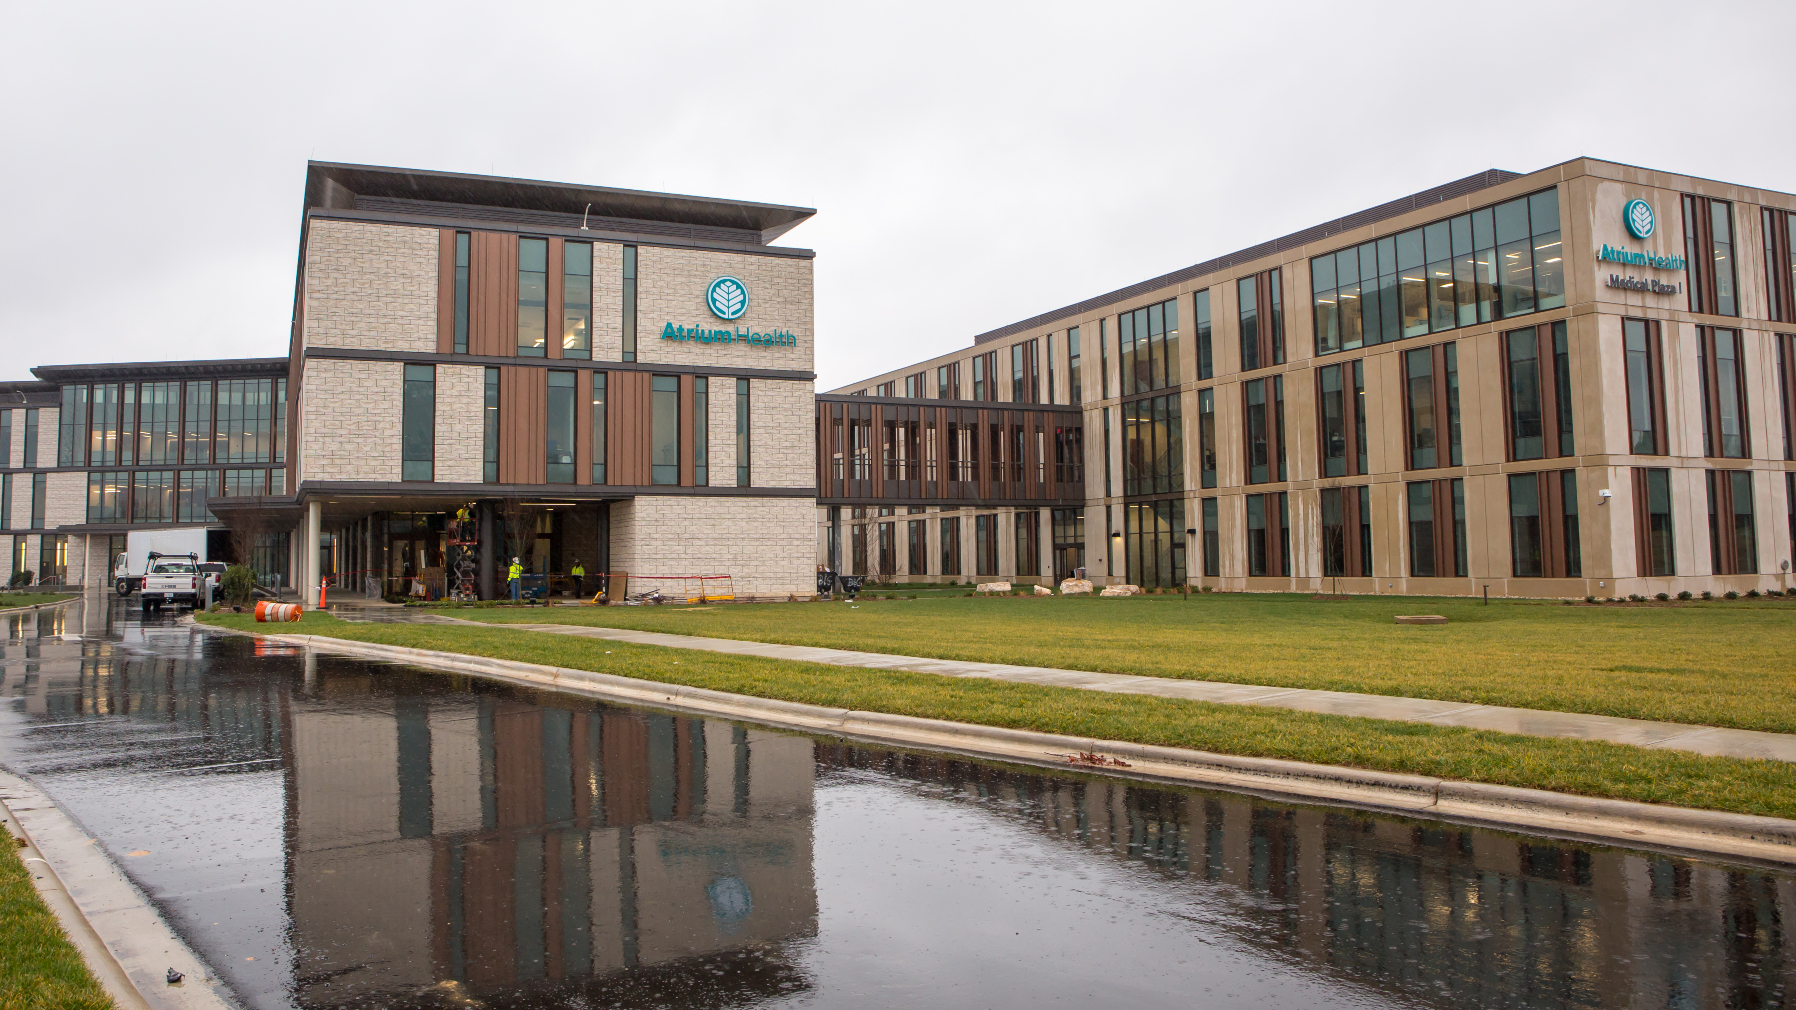 Exterior shot of LCI Union West, Atrium Health Levine Cancer Institute's newest location